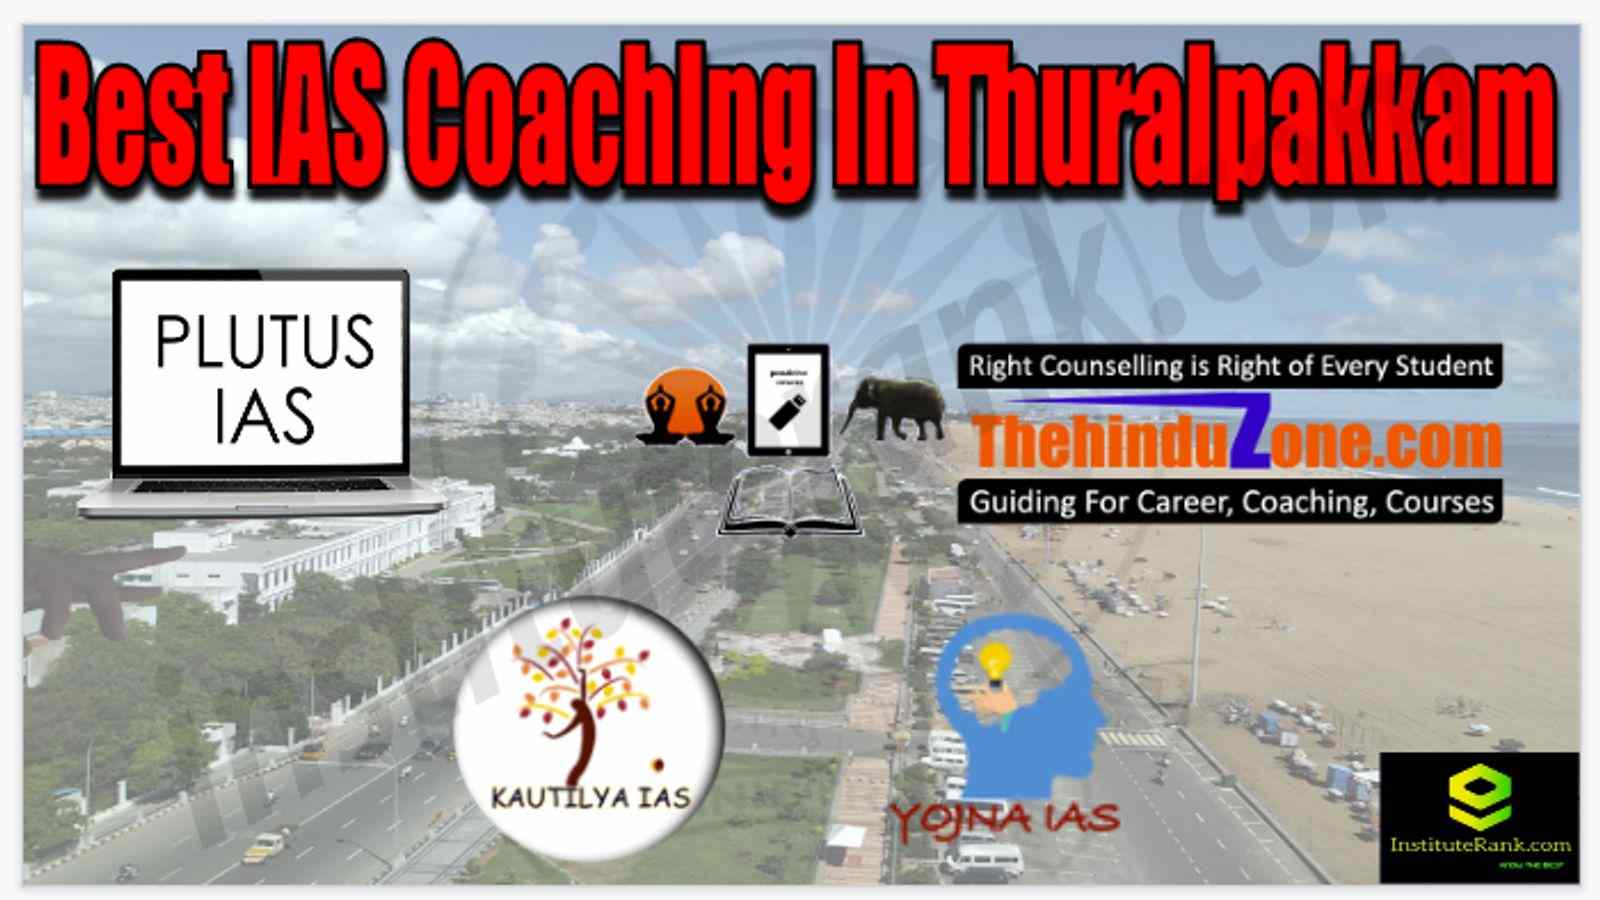 Best IAS Coaching in Thuraipakkam